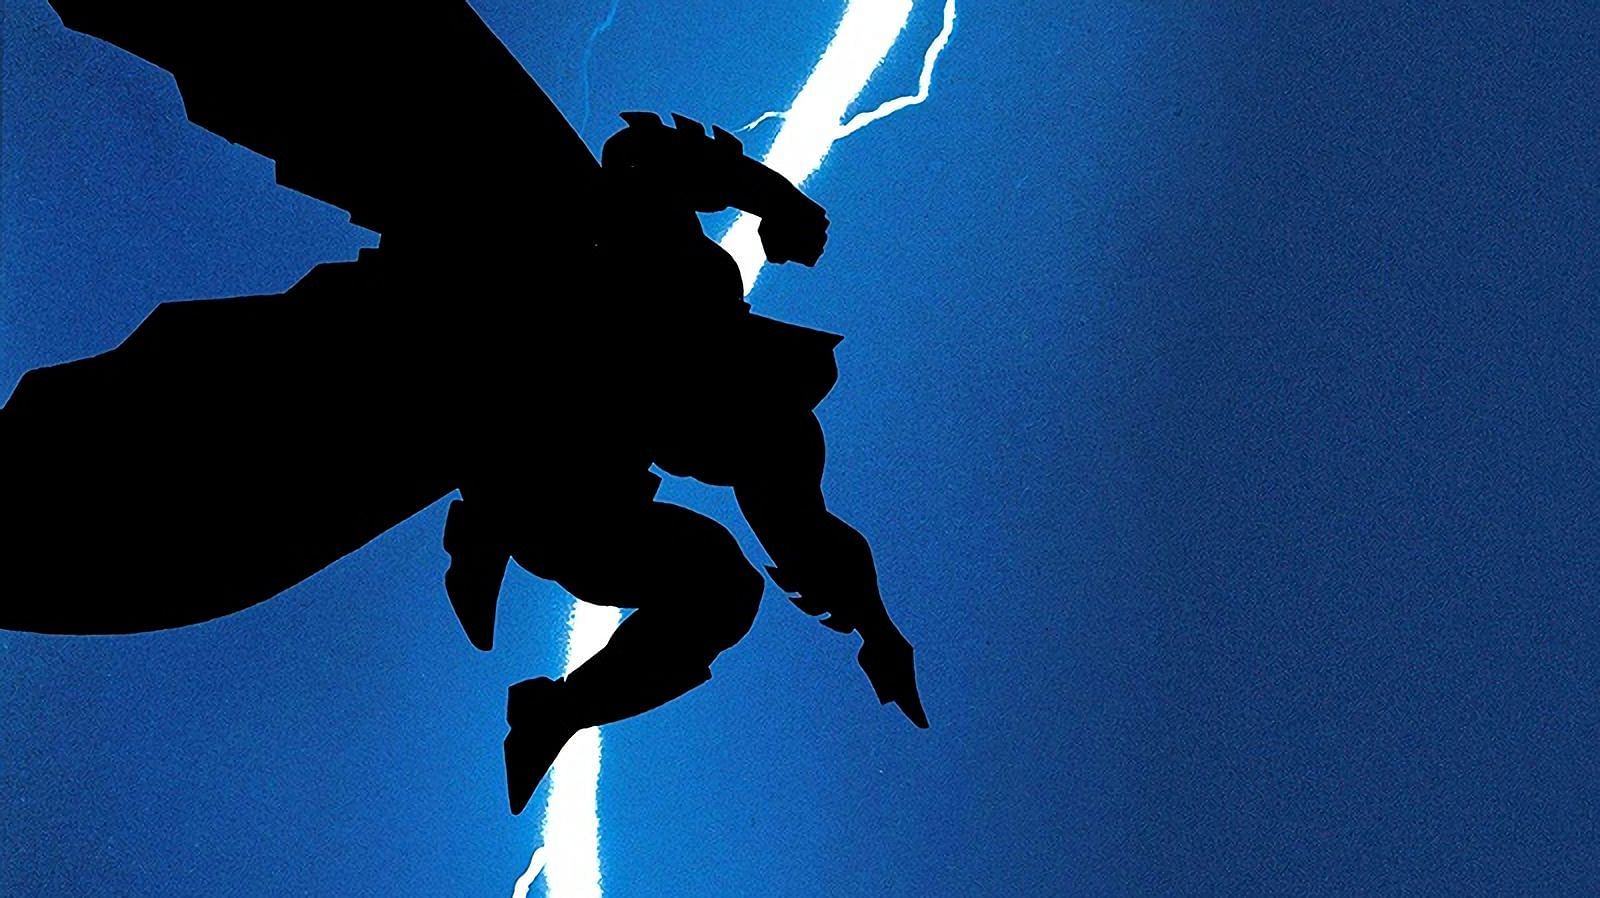 Batman The Dark Knight Returns (Image via DC Comics)